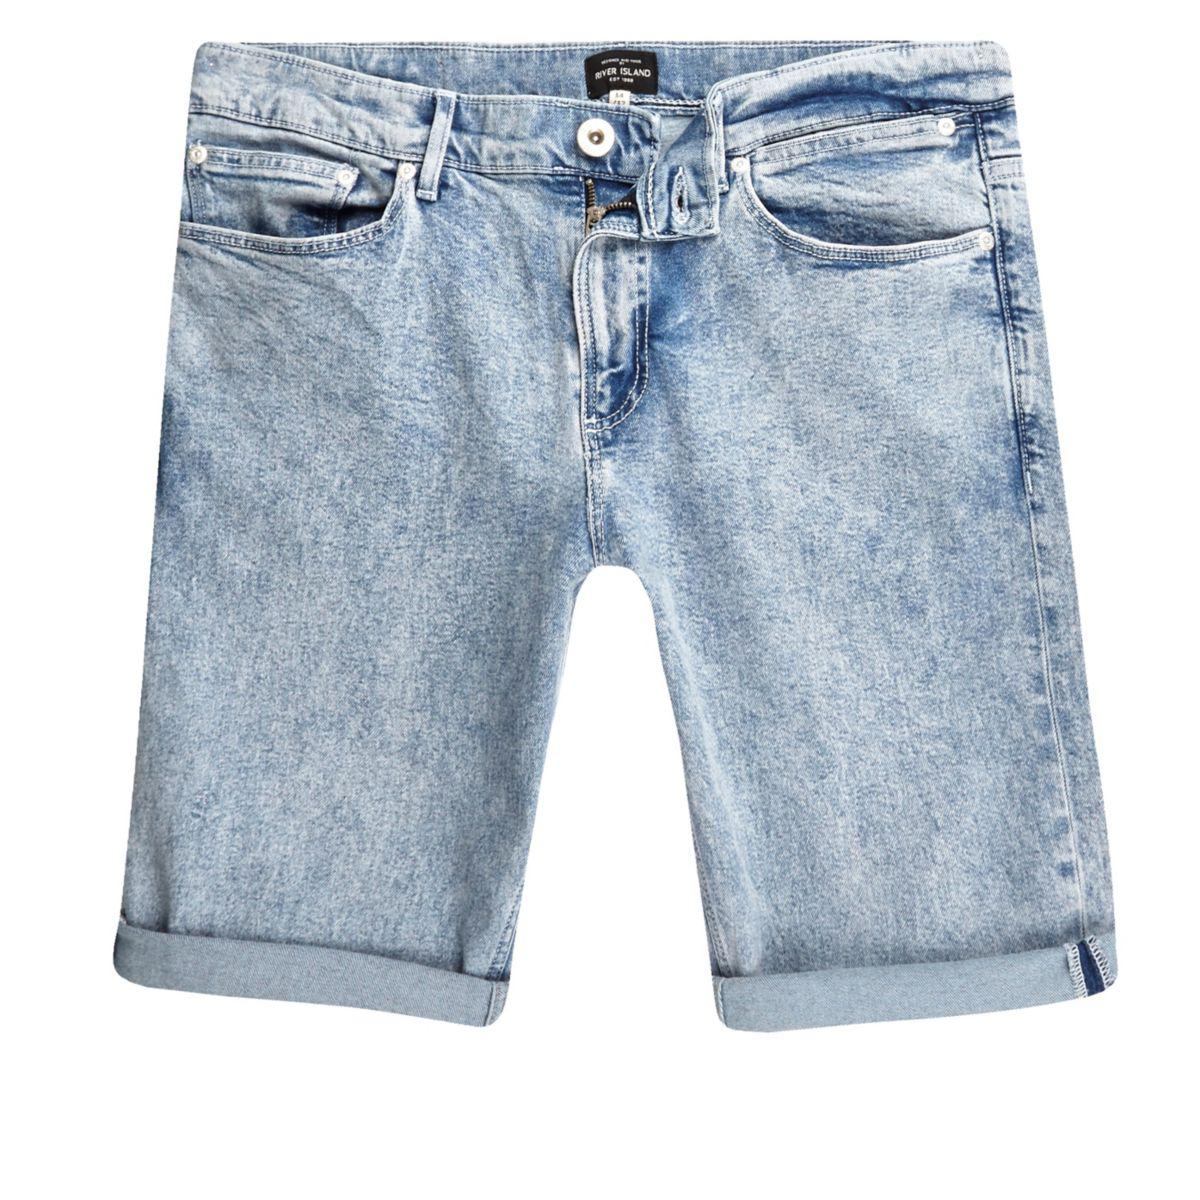 River Island Light Blue Wash Skinny Fit Denim Shorts in Blue for Men - Lyst